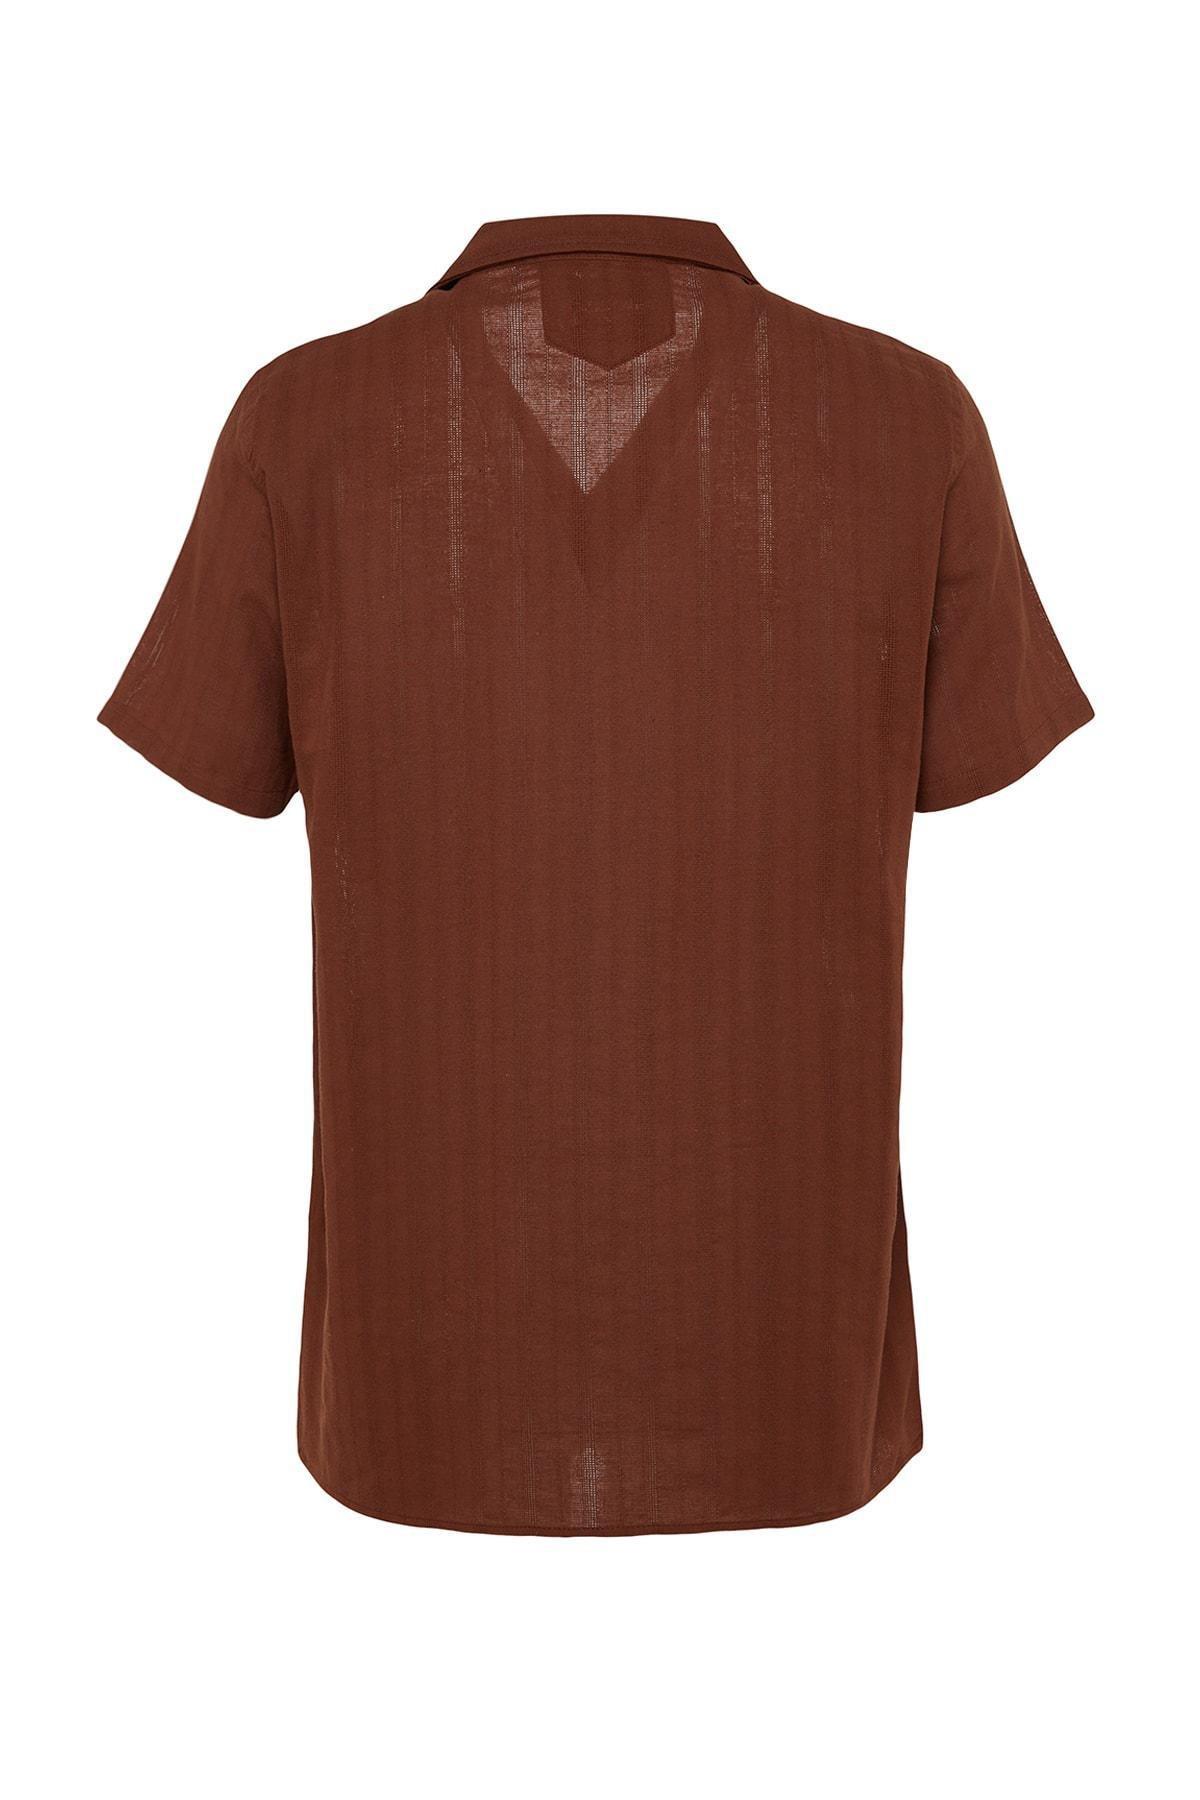 Trendyol - Brown Cotton Collared Shirt